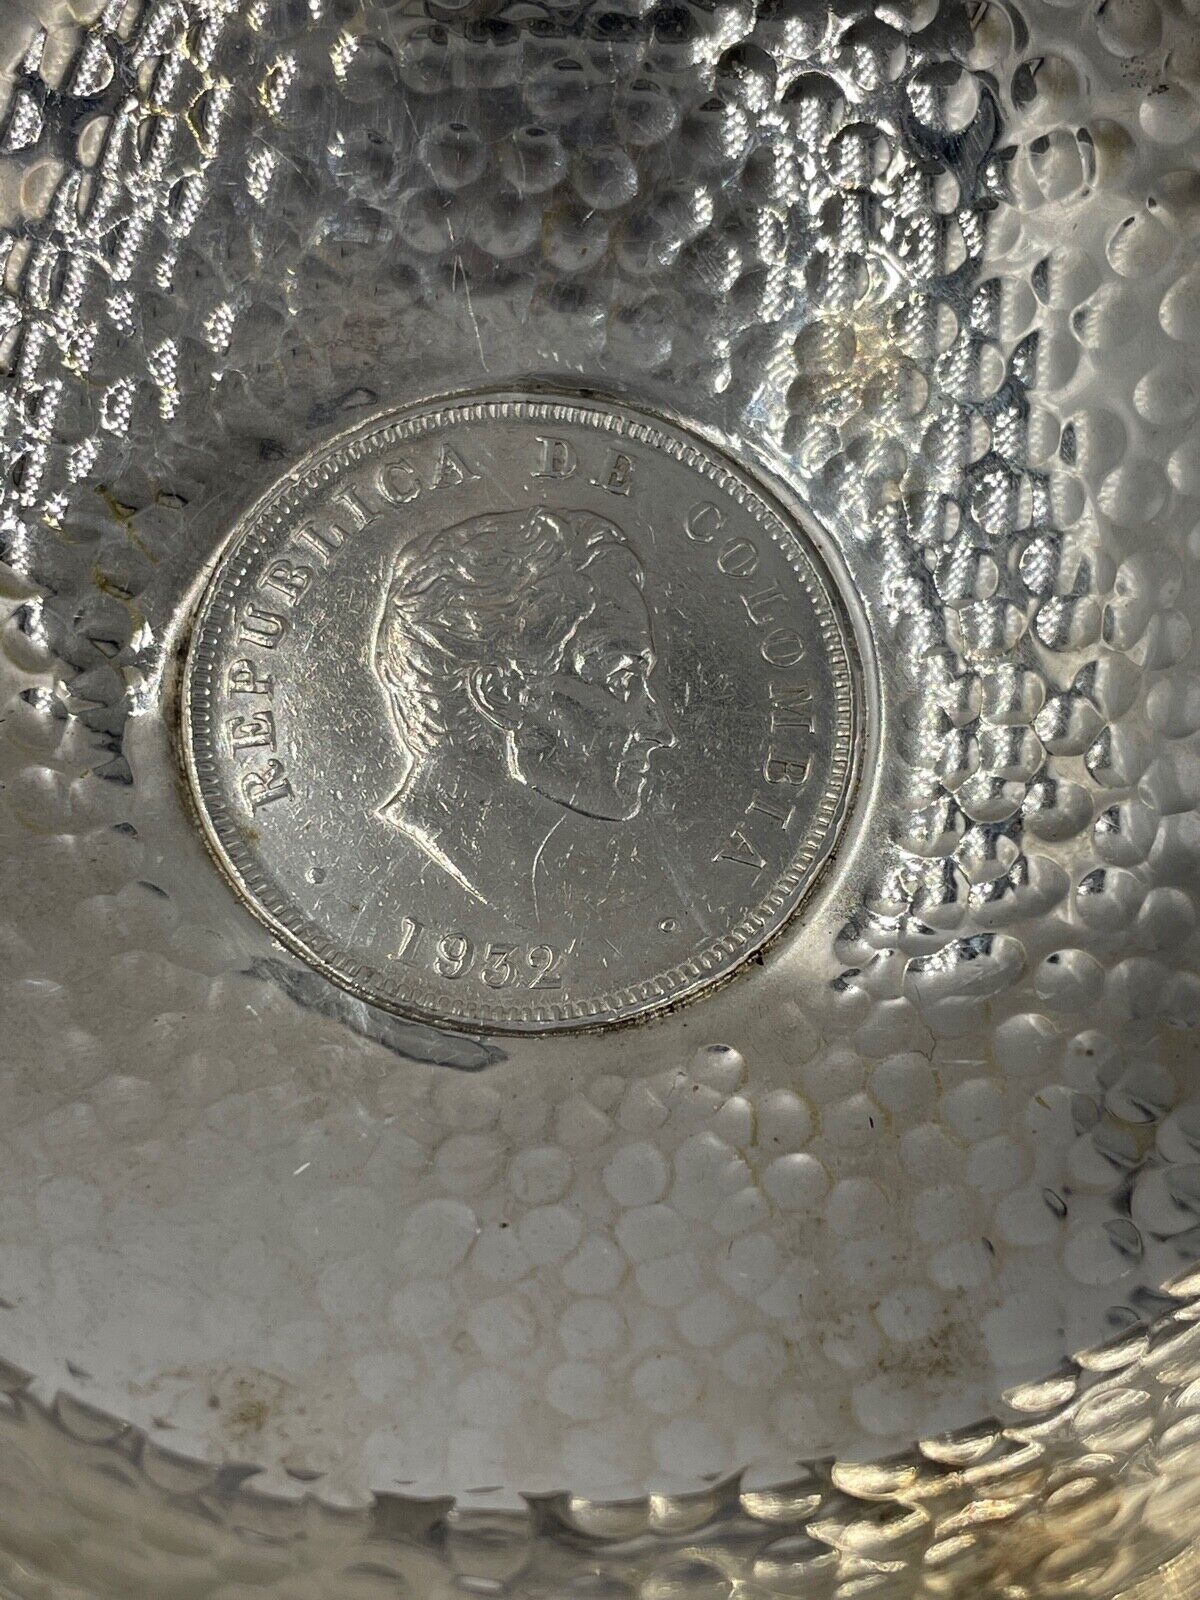 Antique Republica de Colombia 1932 Coin 900 Silver Ash Tray